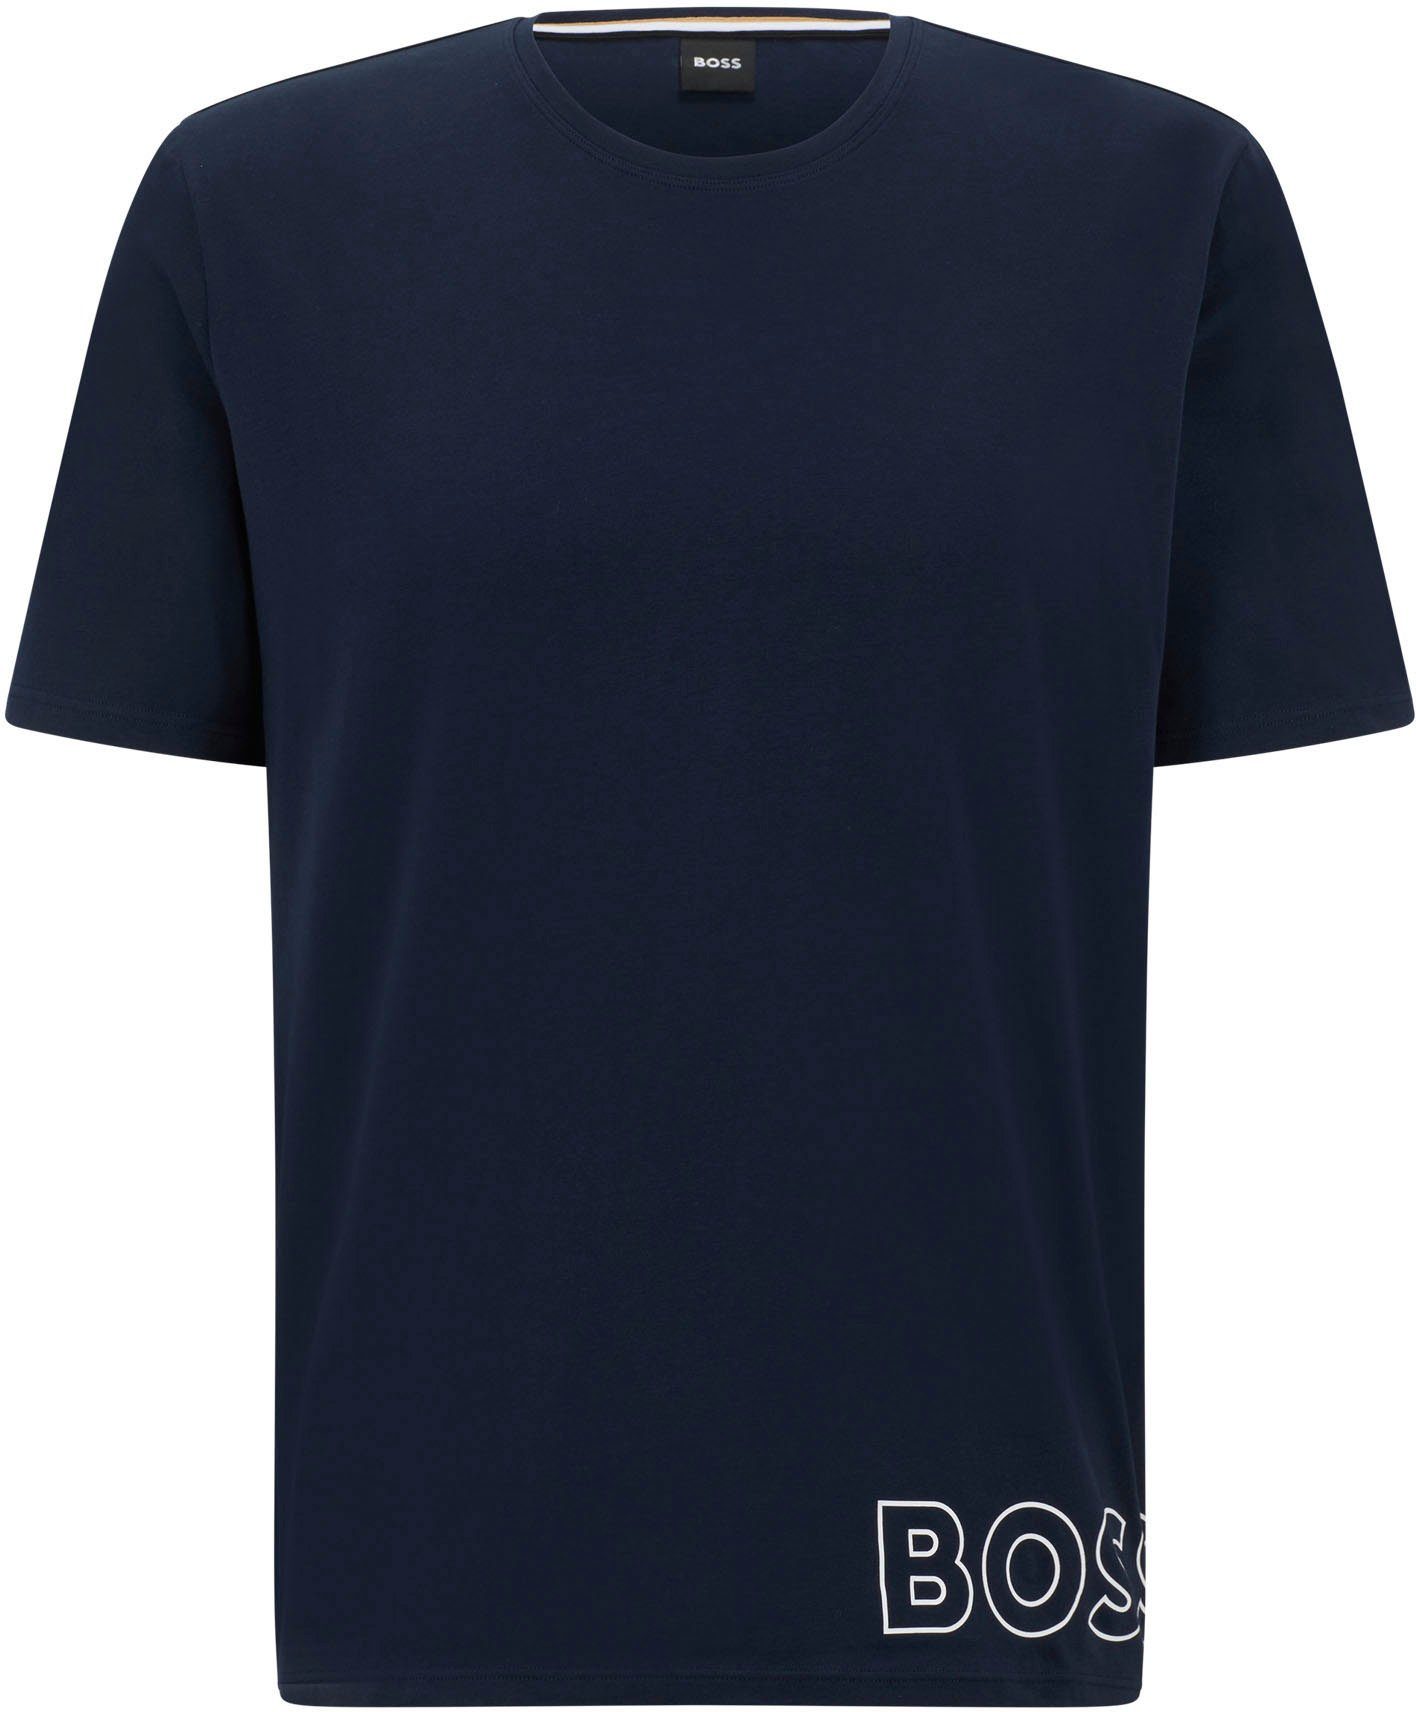 Logodruck mit BOSS dunkelblau T-Shirt